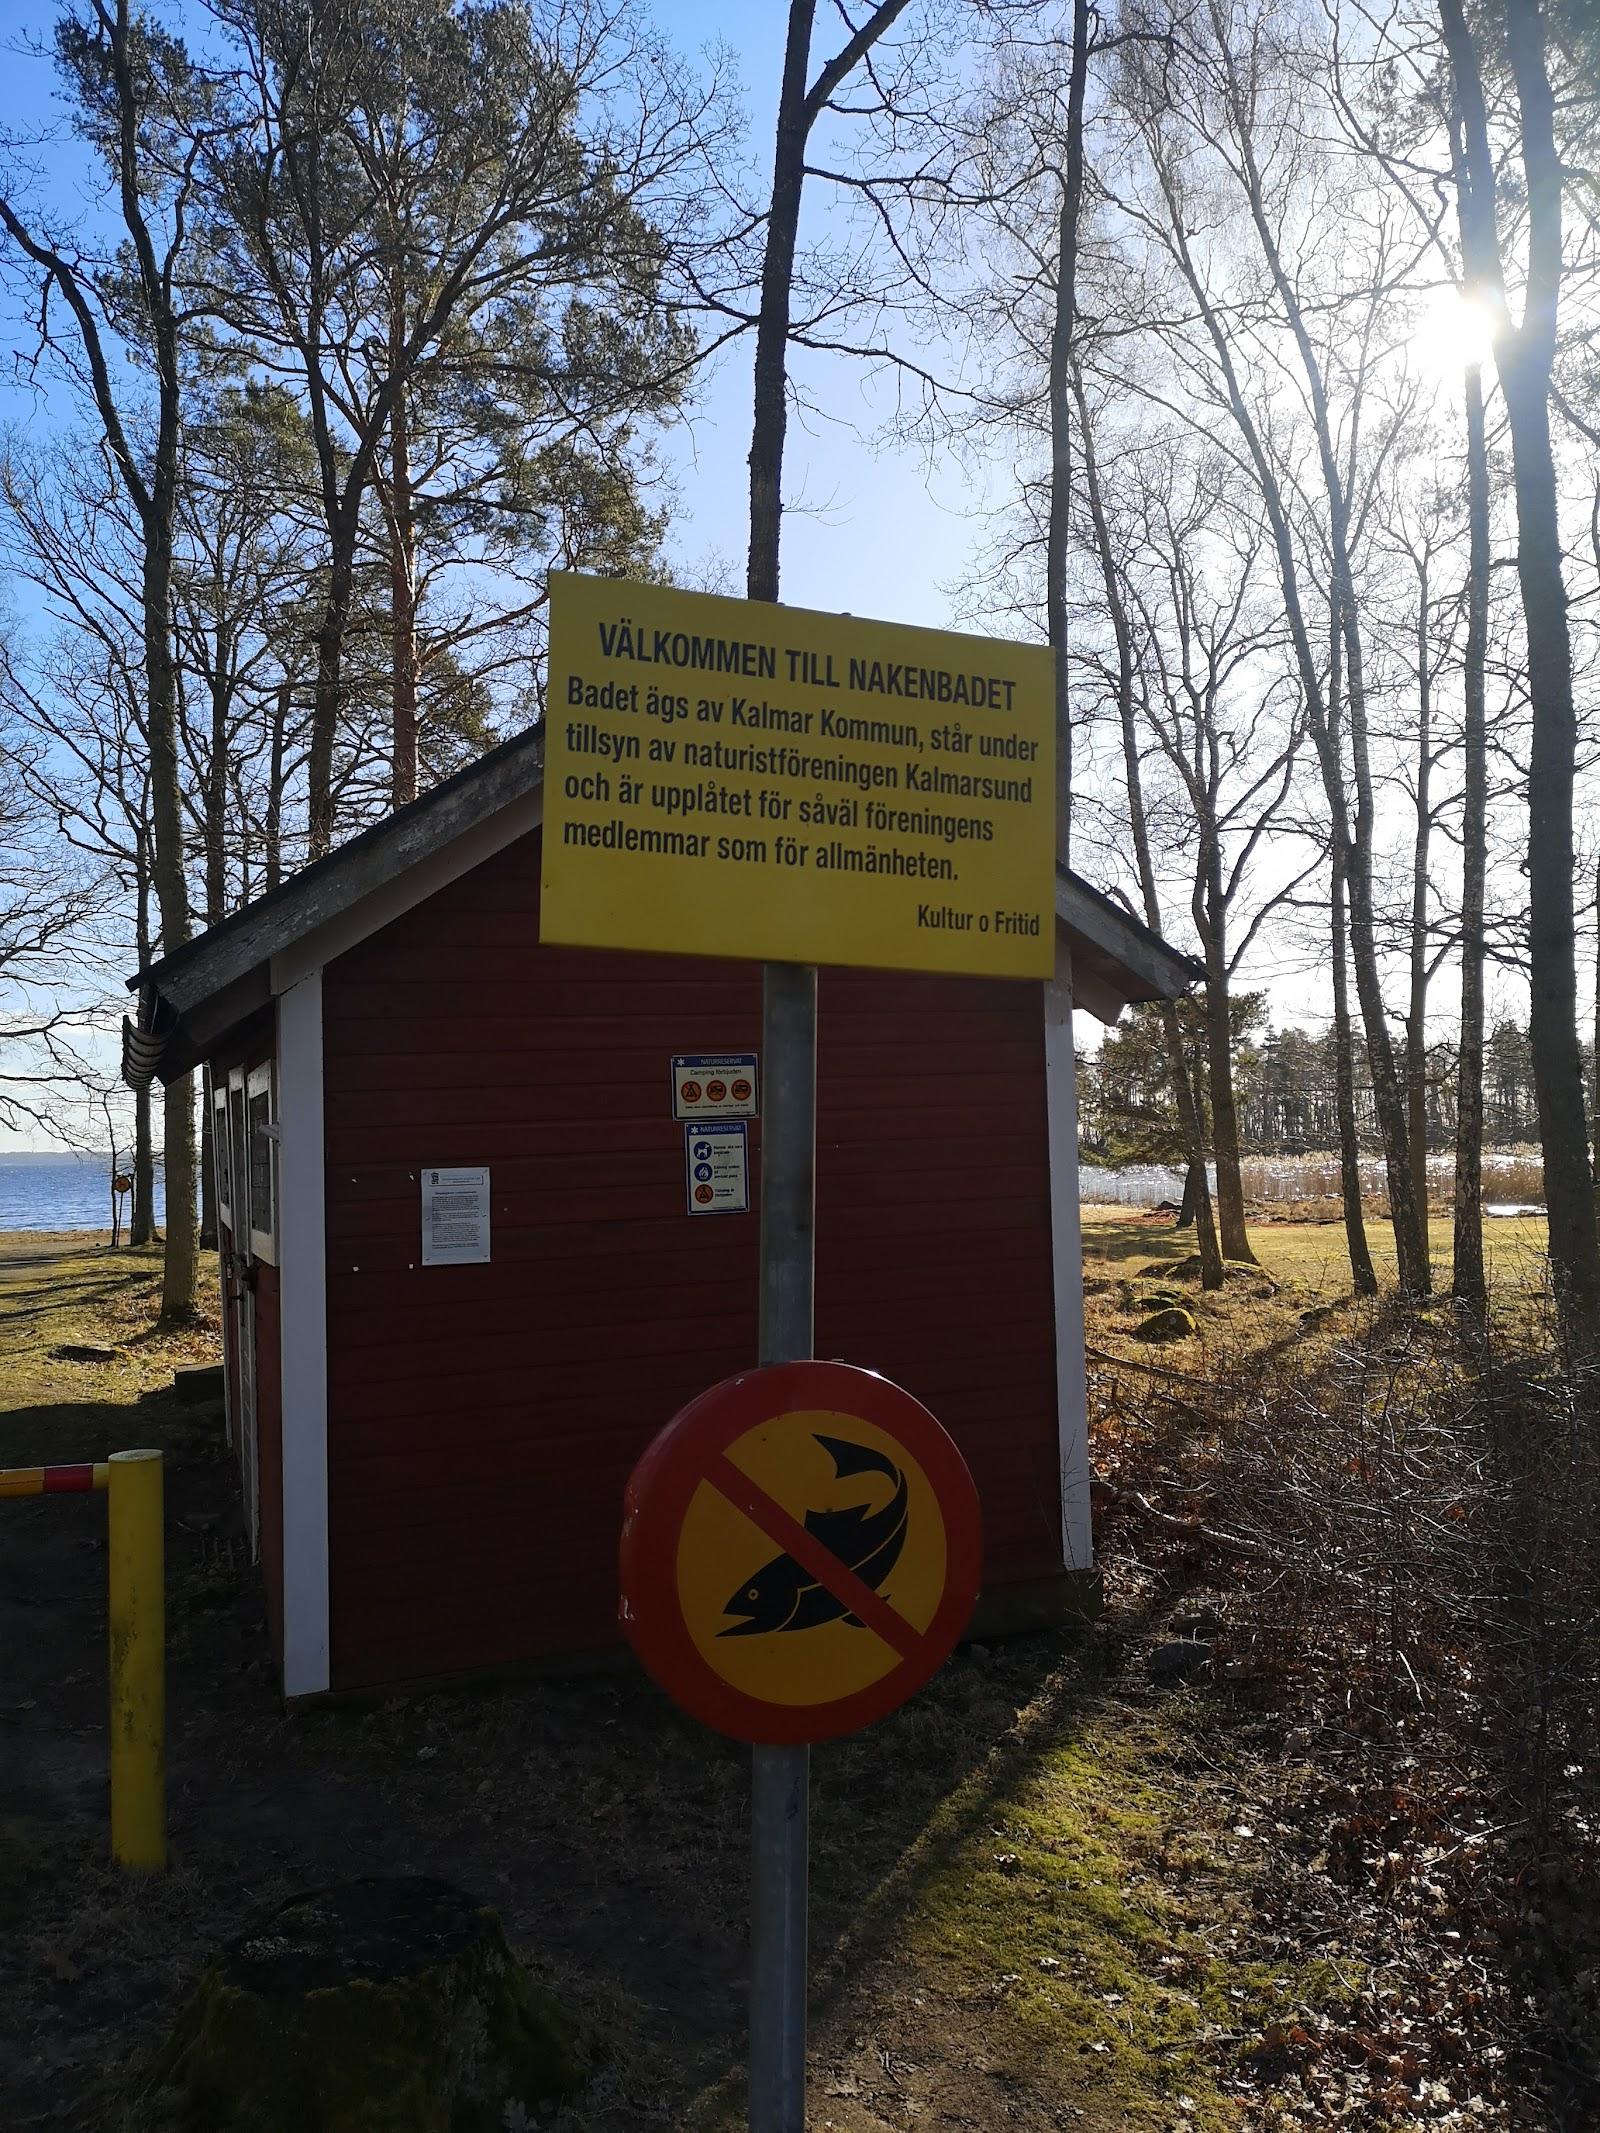 Sandee - Country / Kalmar